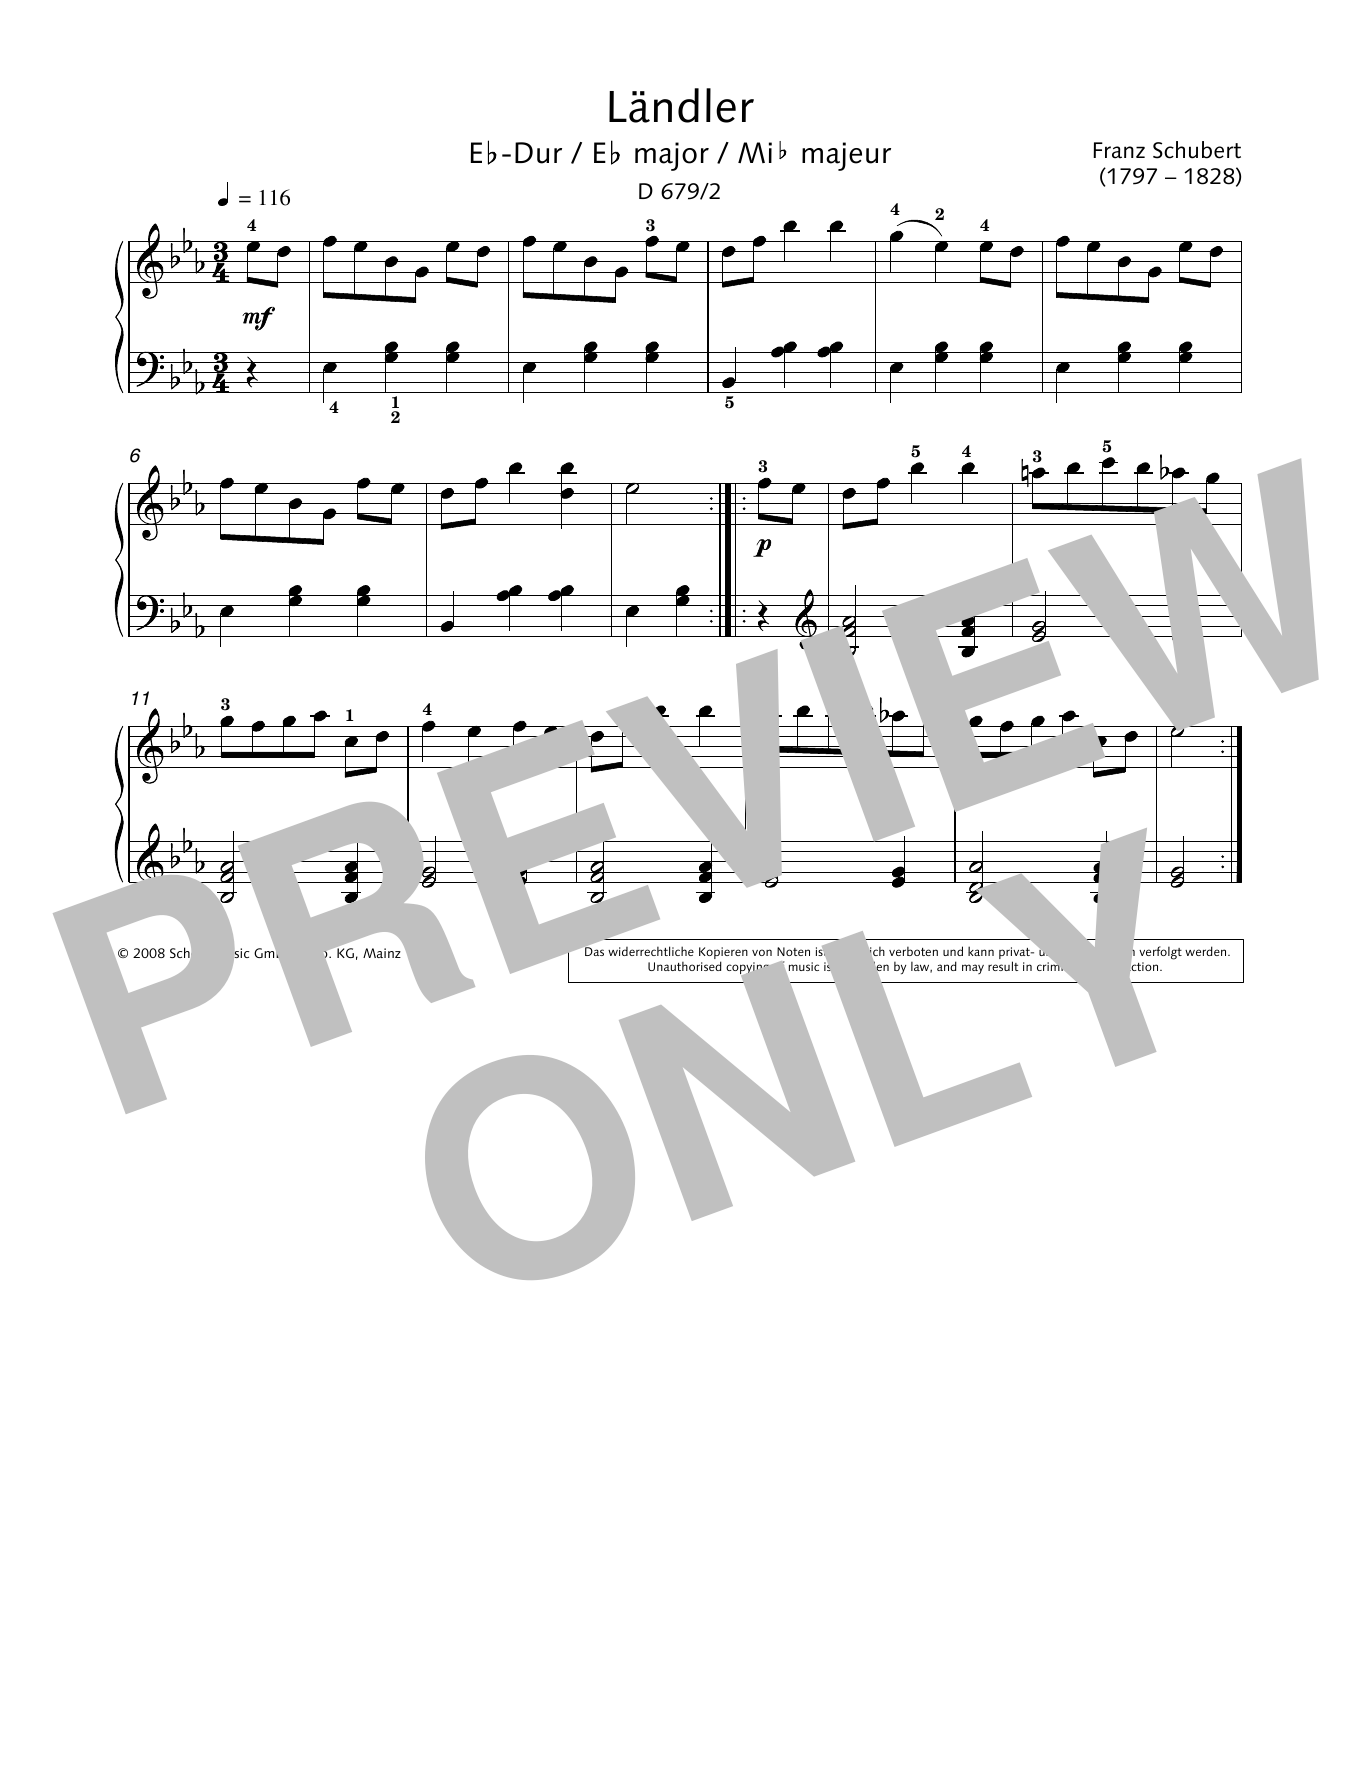 Hans-Gunter Heumann Ländler in E-flat major Sheet Music Notes & Chords for Piano Solo - Download or Print PDF